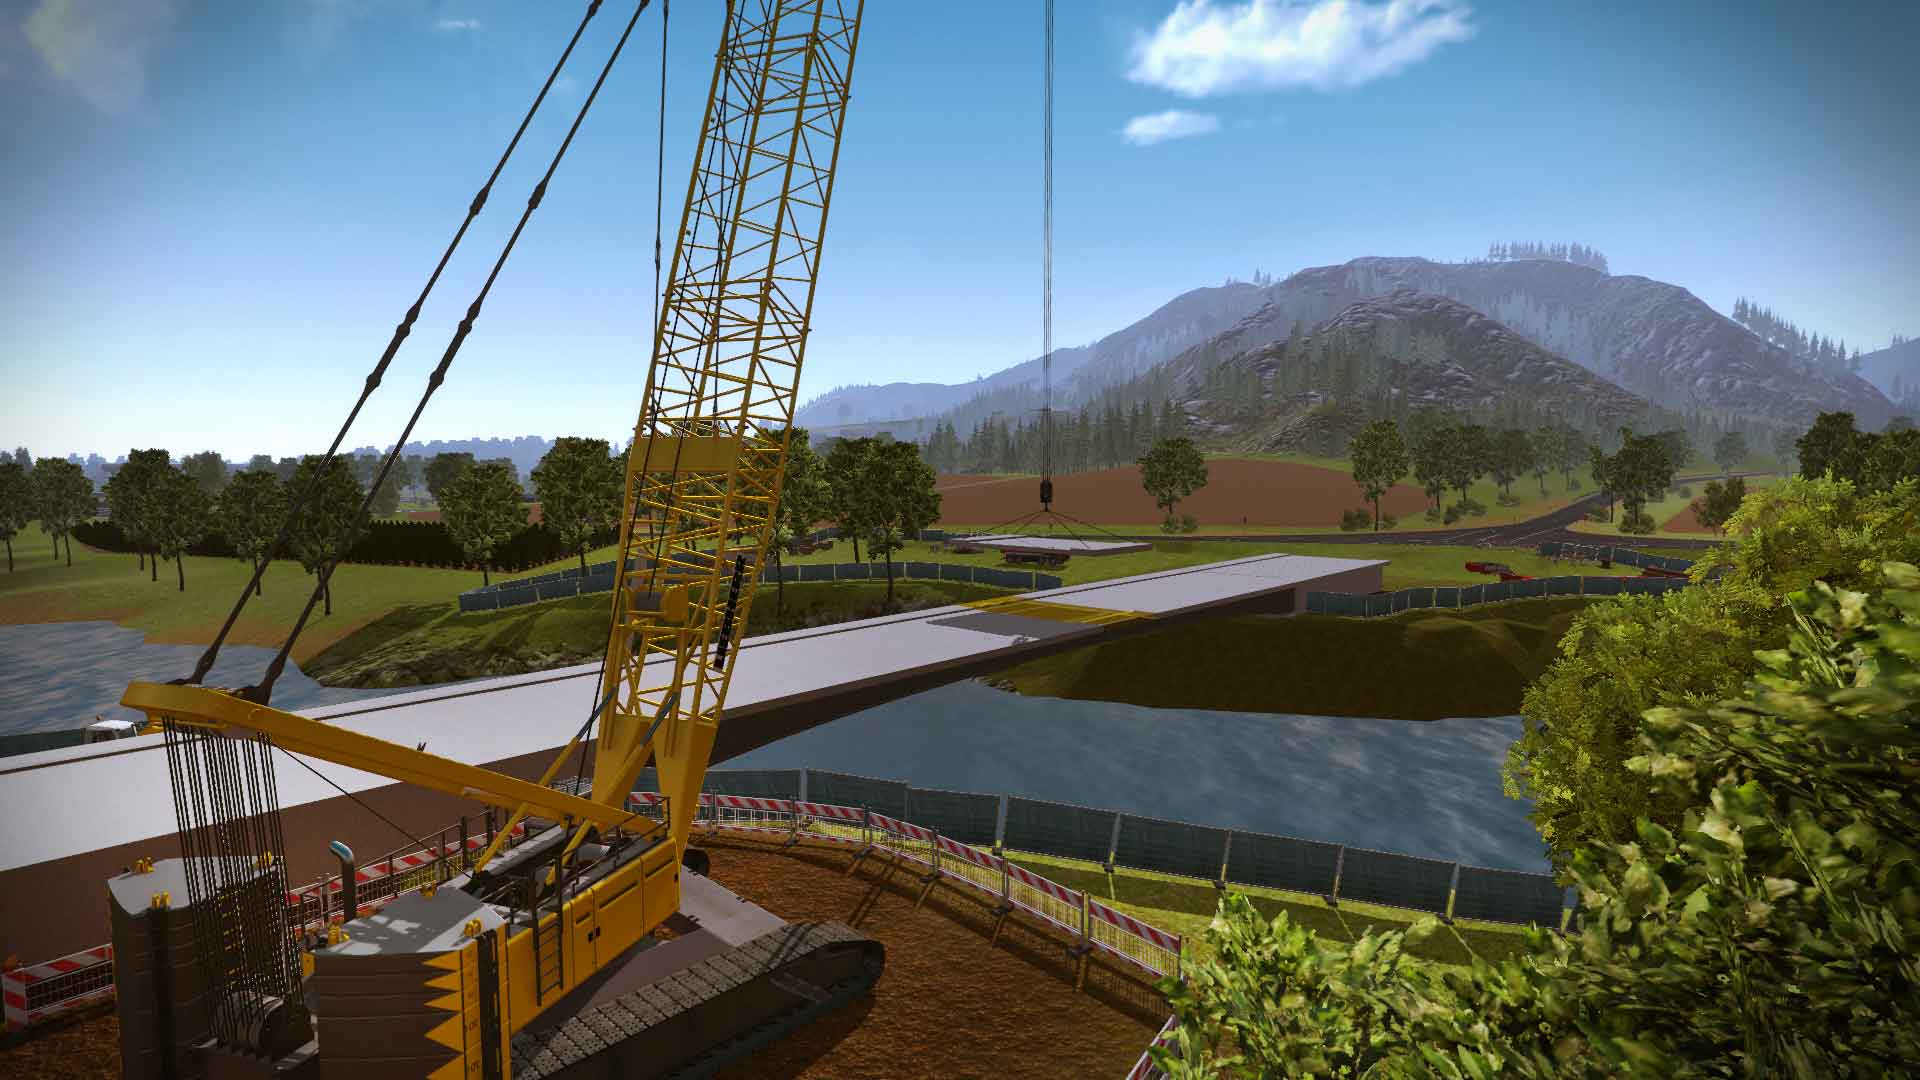 pc construction simulator 2015